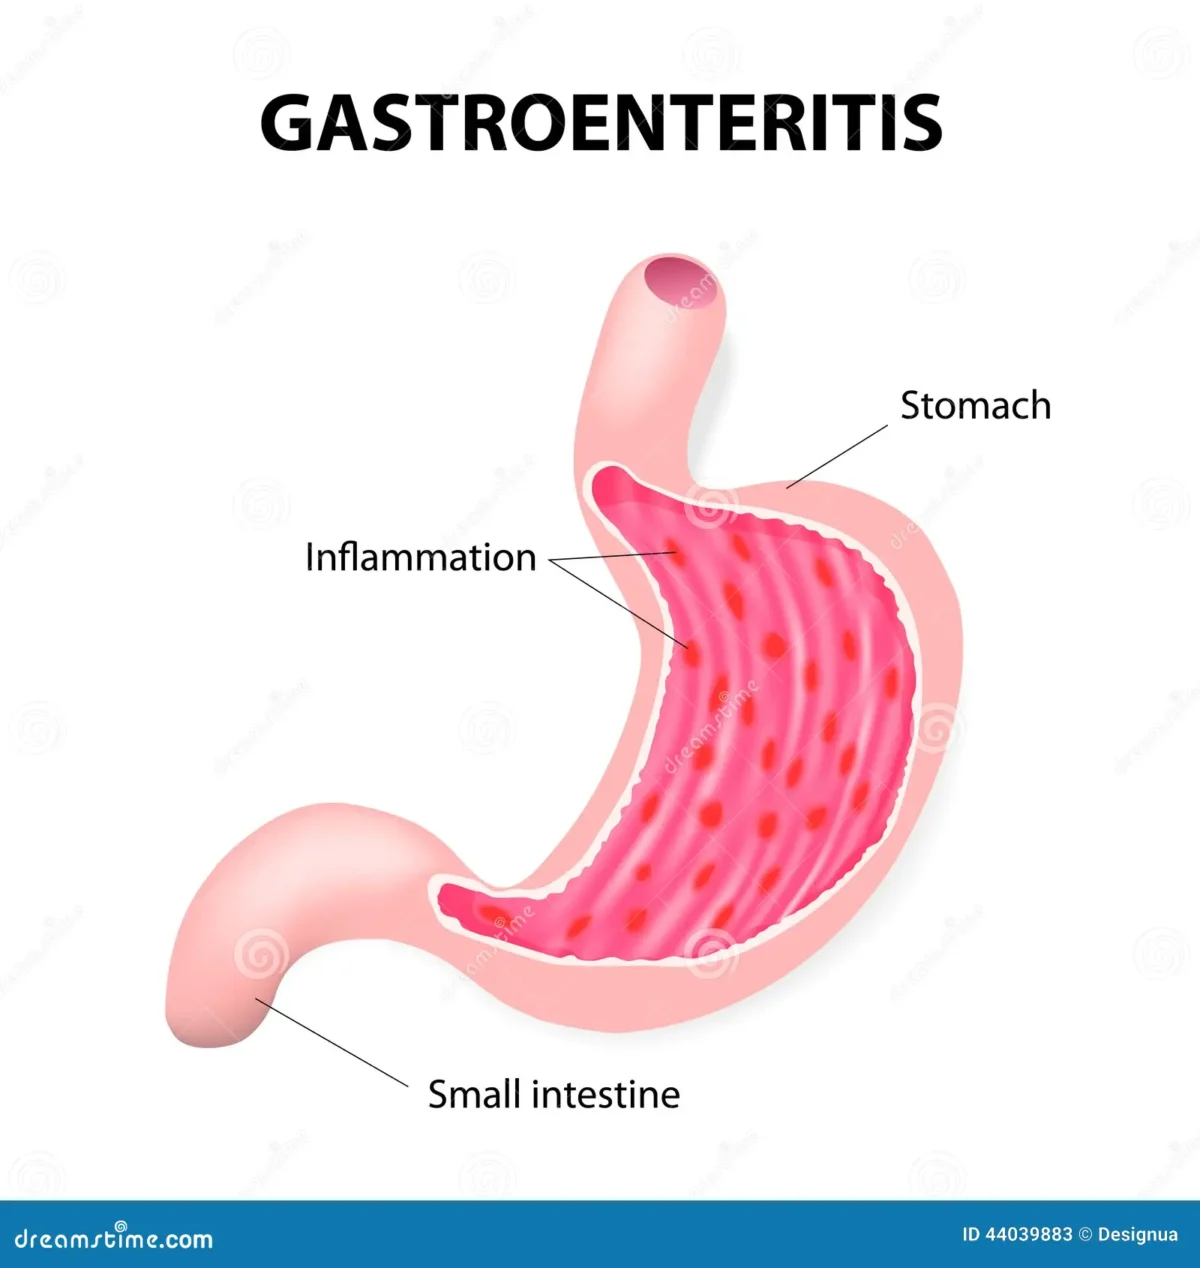 stomach-virus-gastroenteritis-flu-gastric-flu-44039883-1200x1268.webp